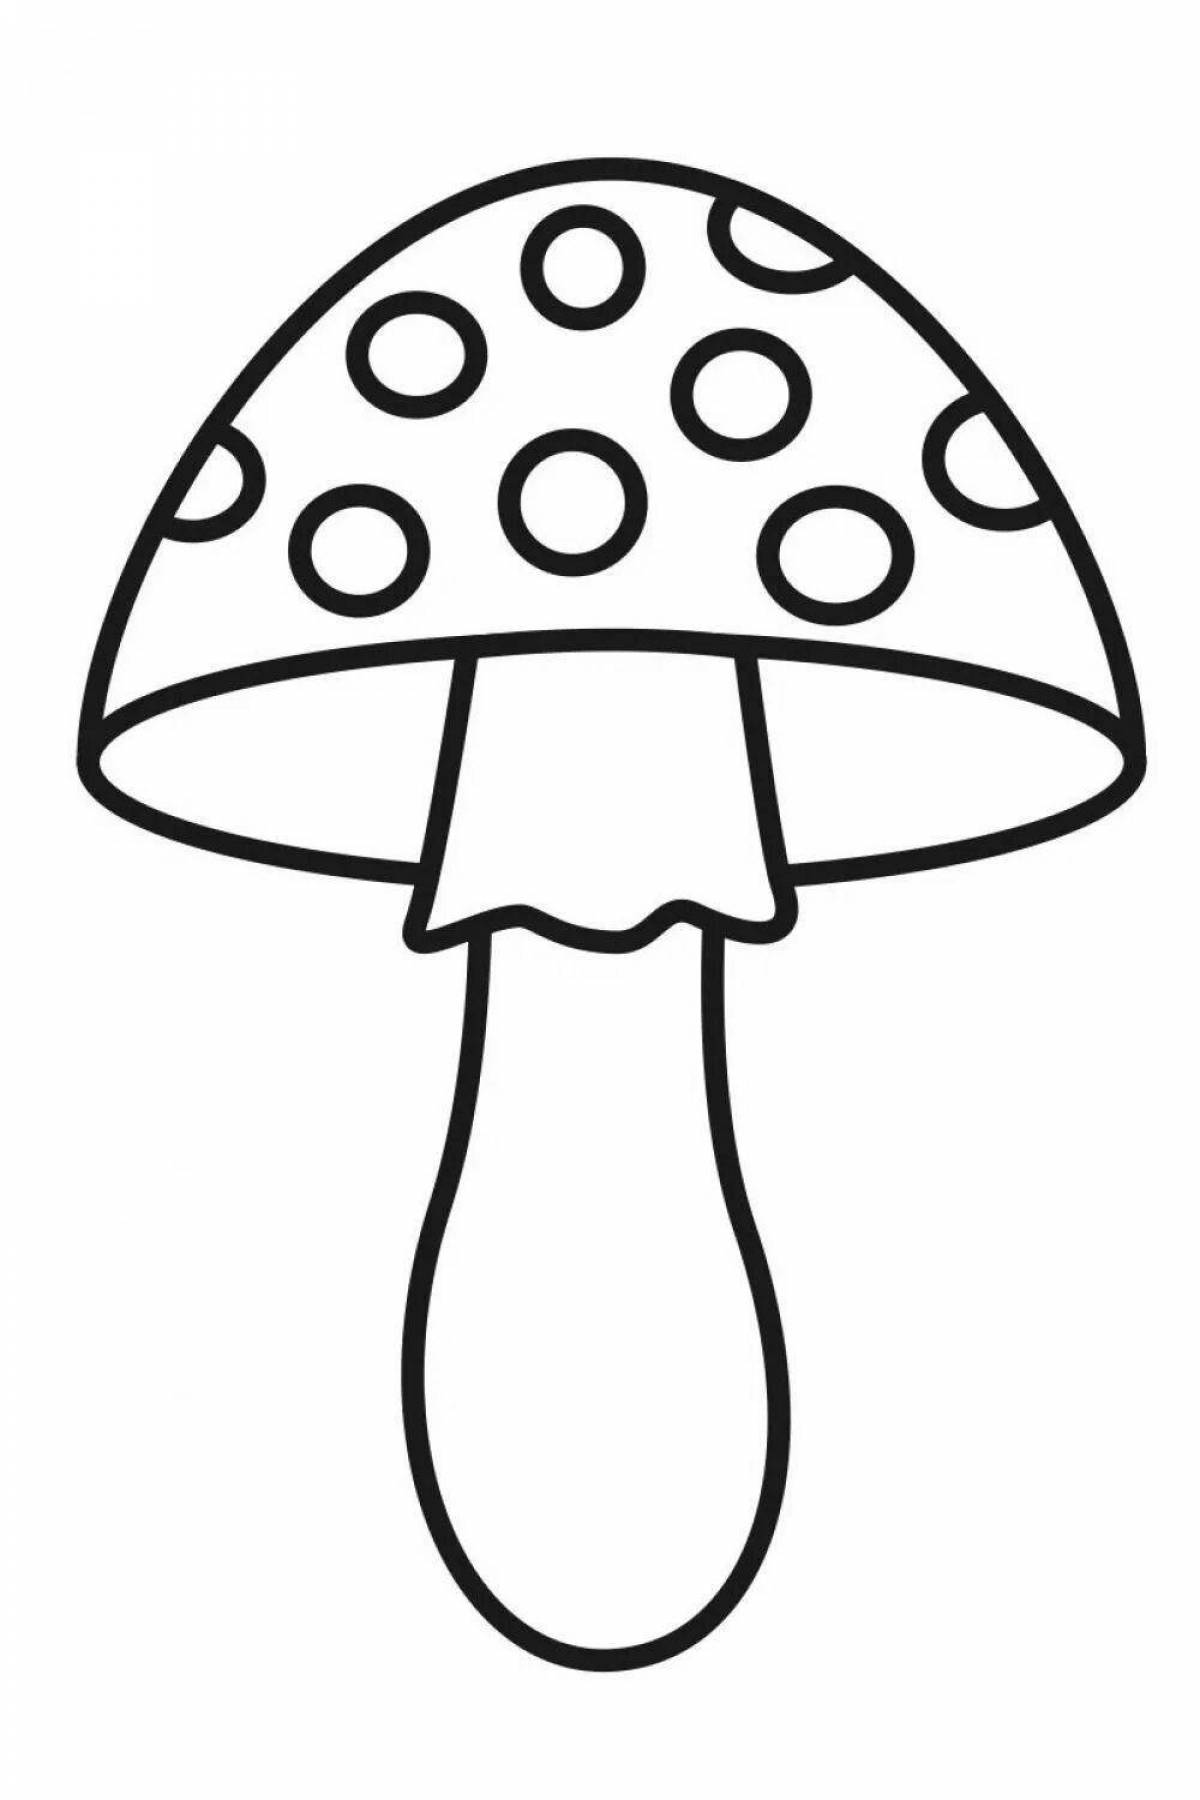 Fancy drawing of a fly agaric mushroom